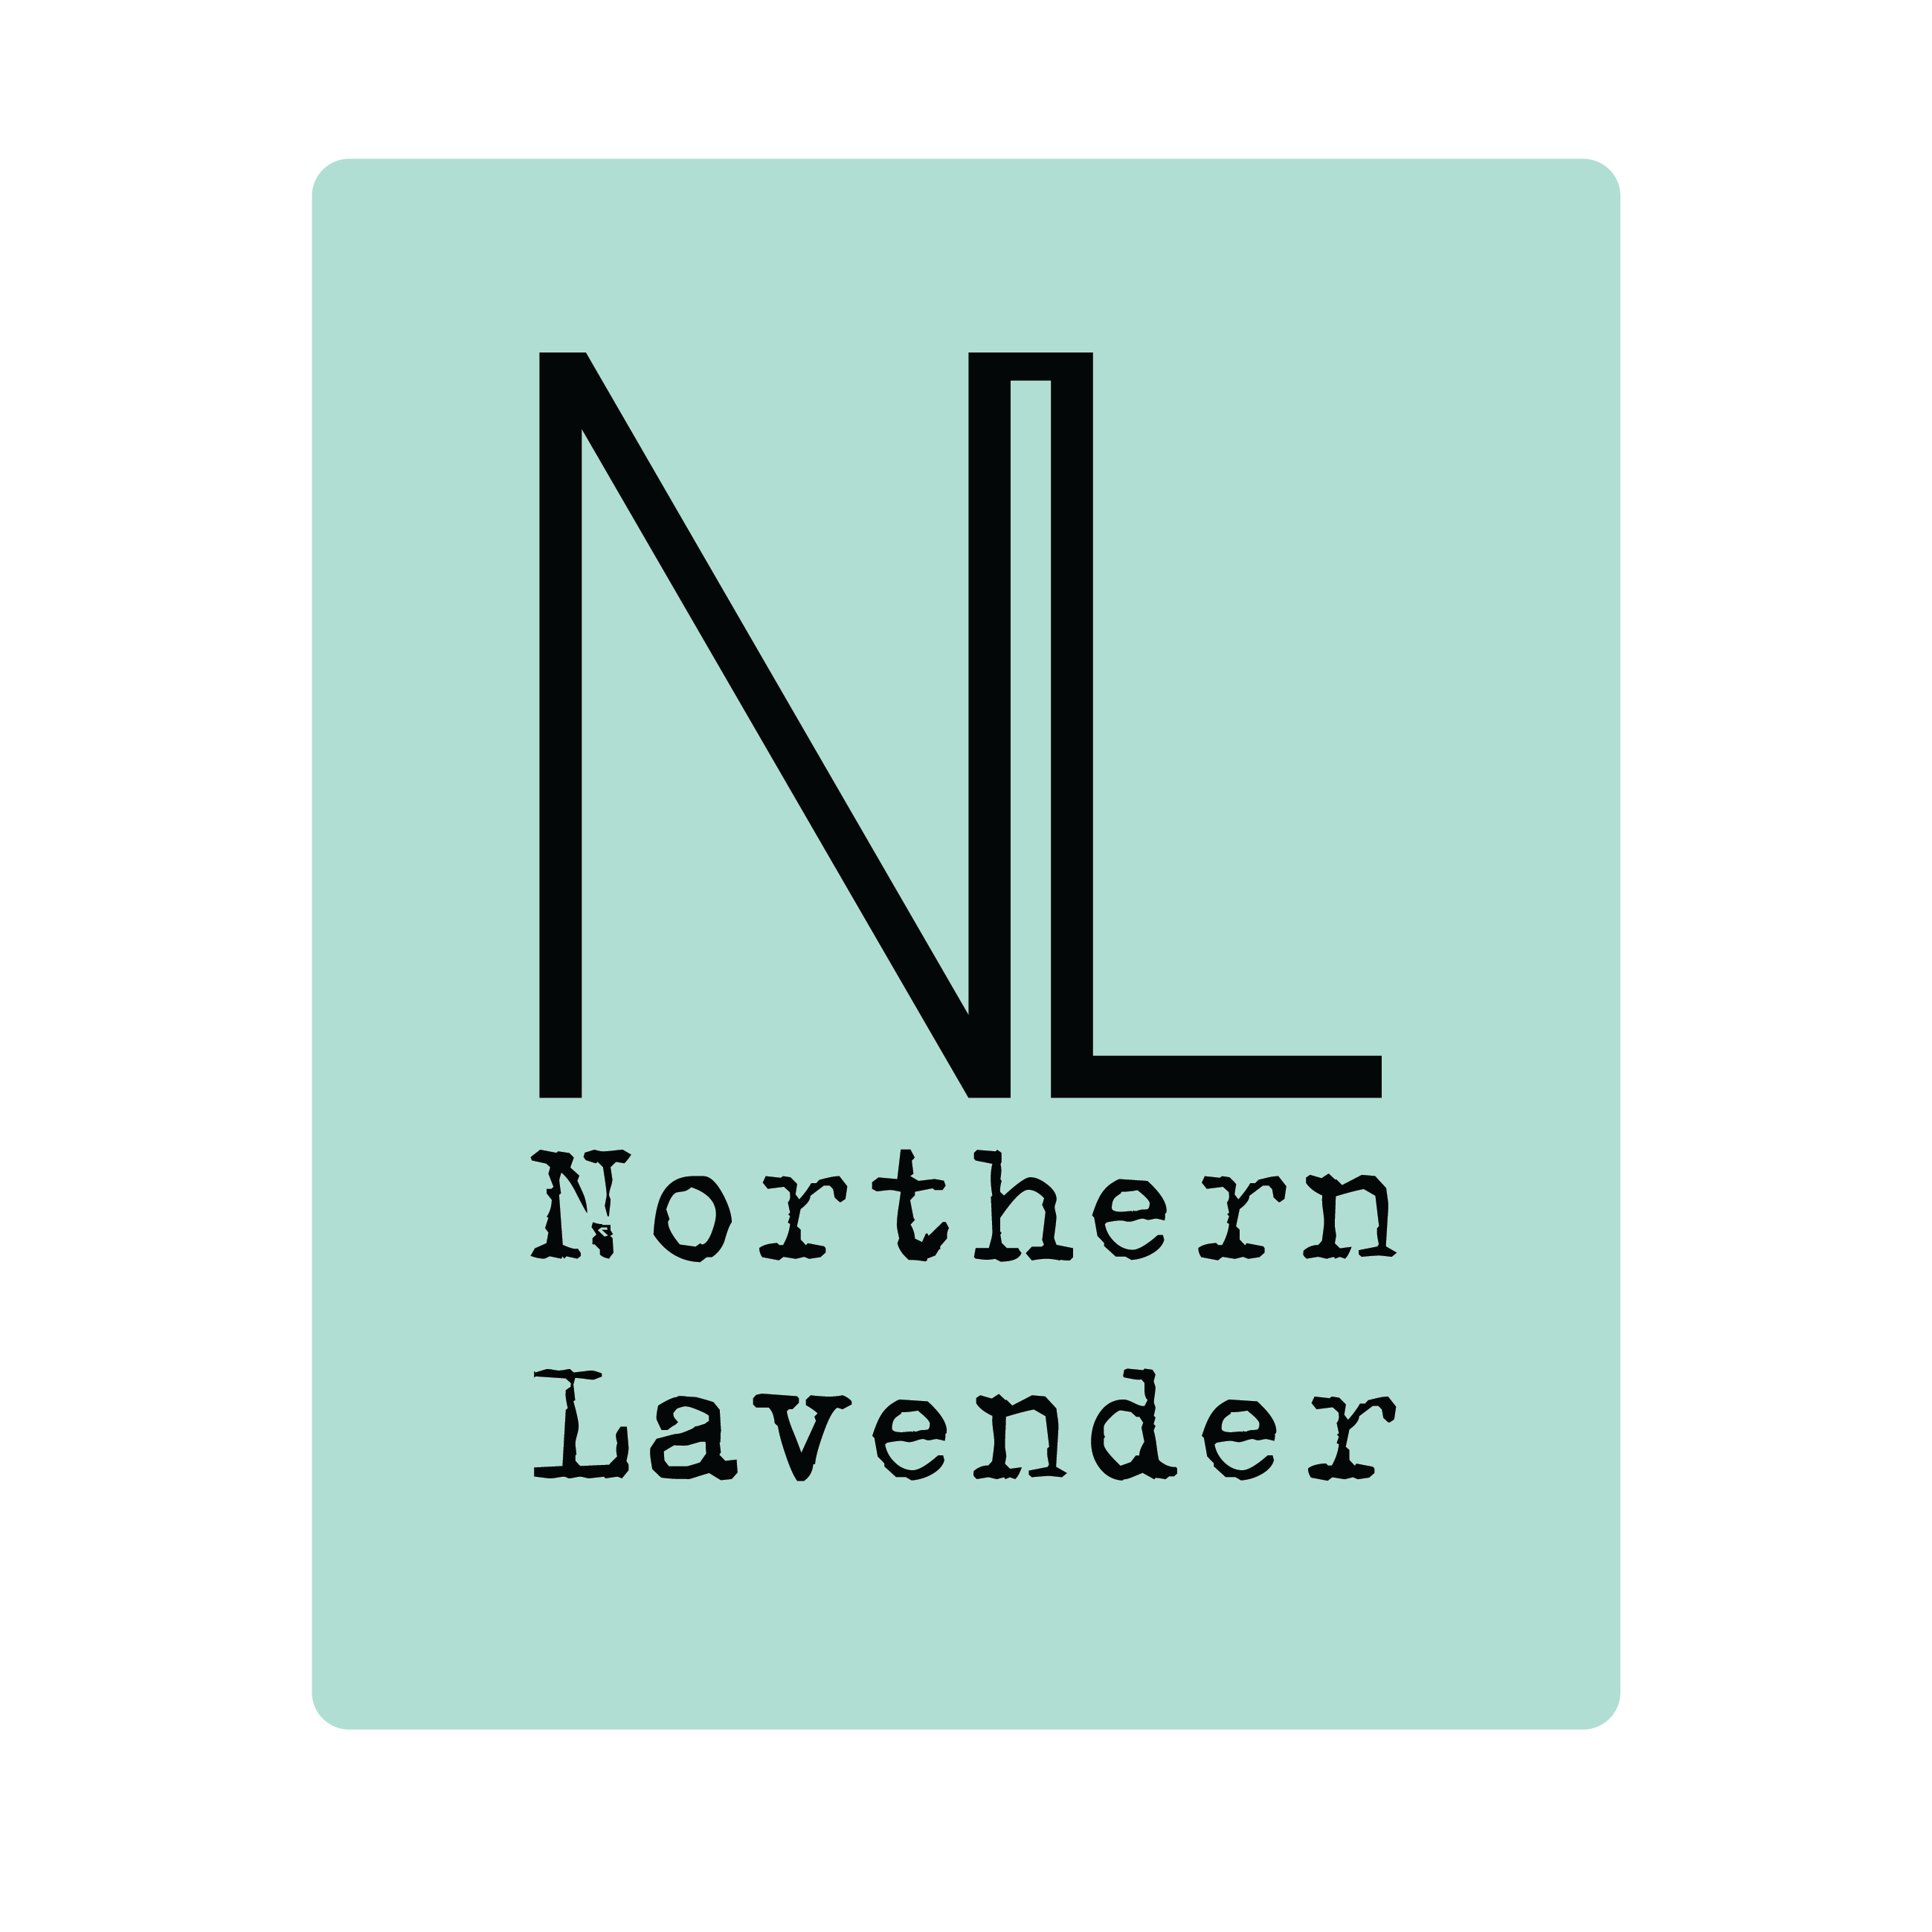 Northern lavender